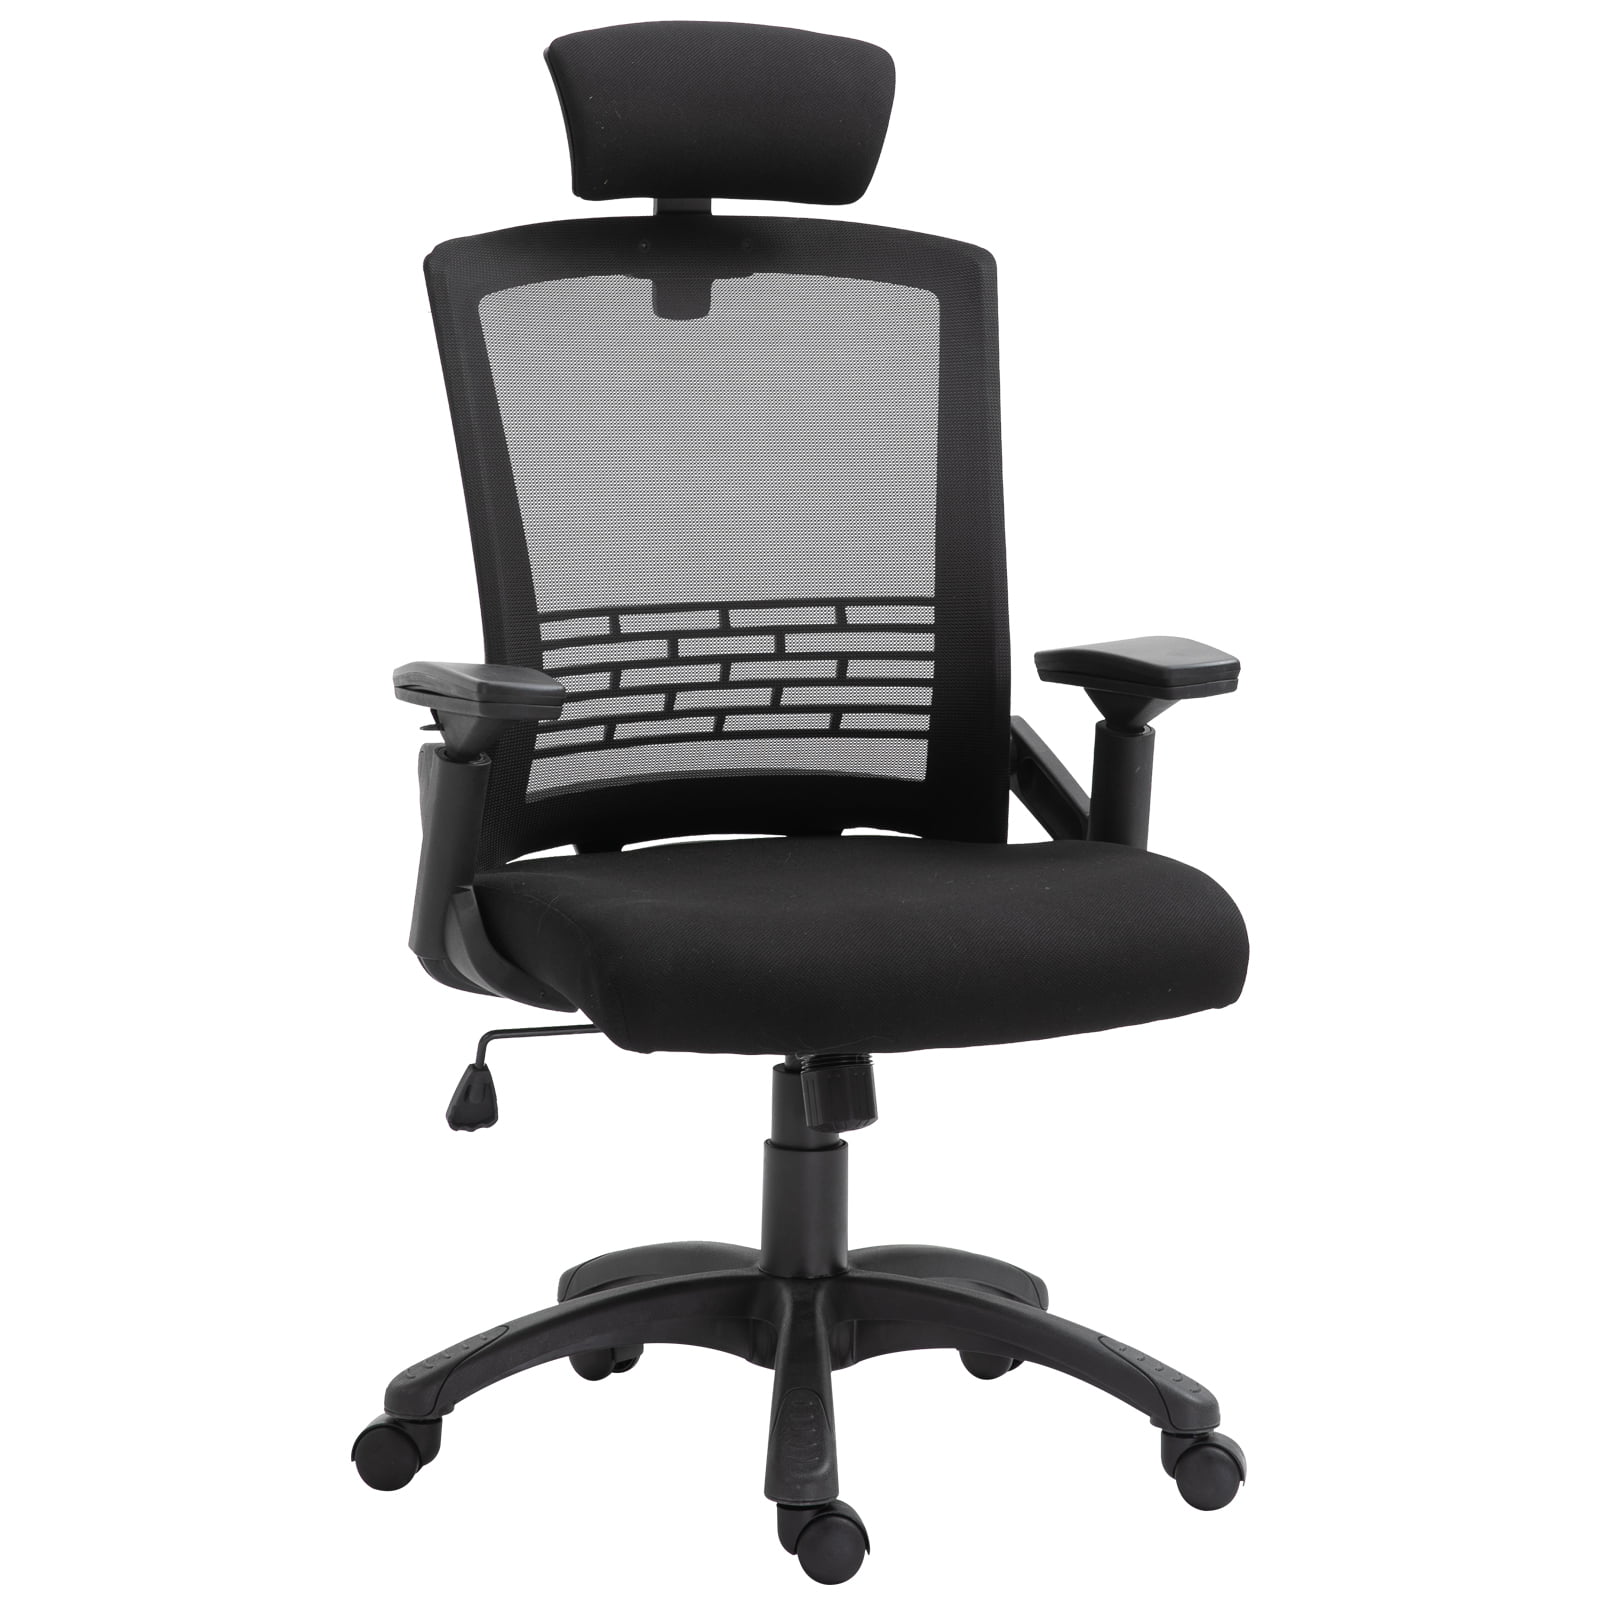 Green Height Adjustable Linen Padded Swivel Vinsetto High Back Office Chair Mesh Desk Chair with Ergonomic Headrest 